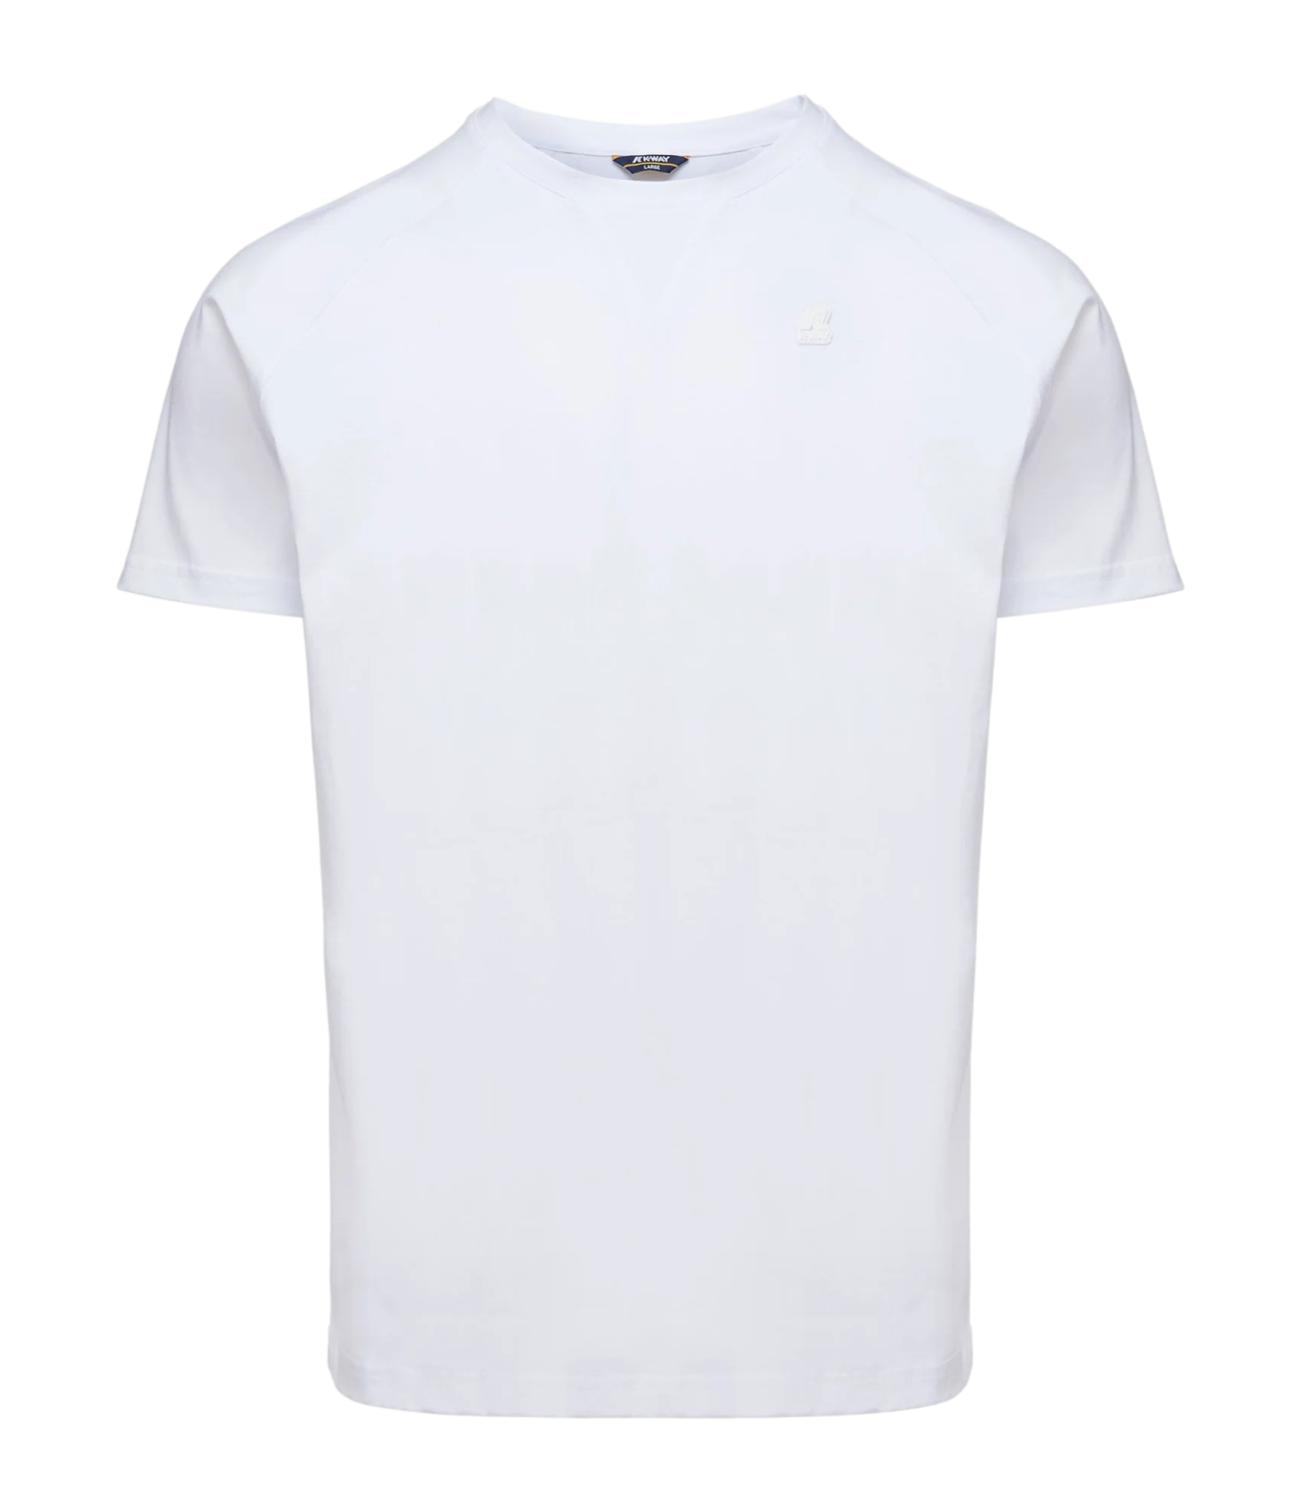 K-way t-shirt bianca uomo Edwing